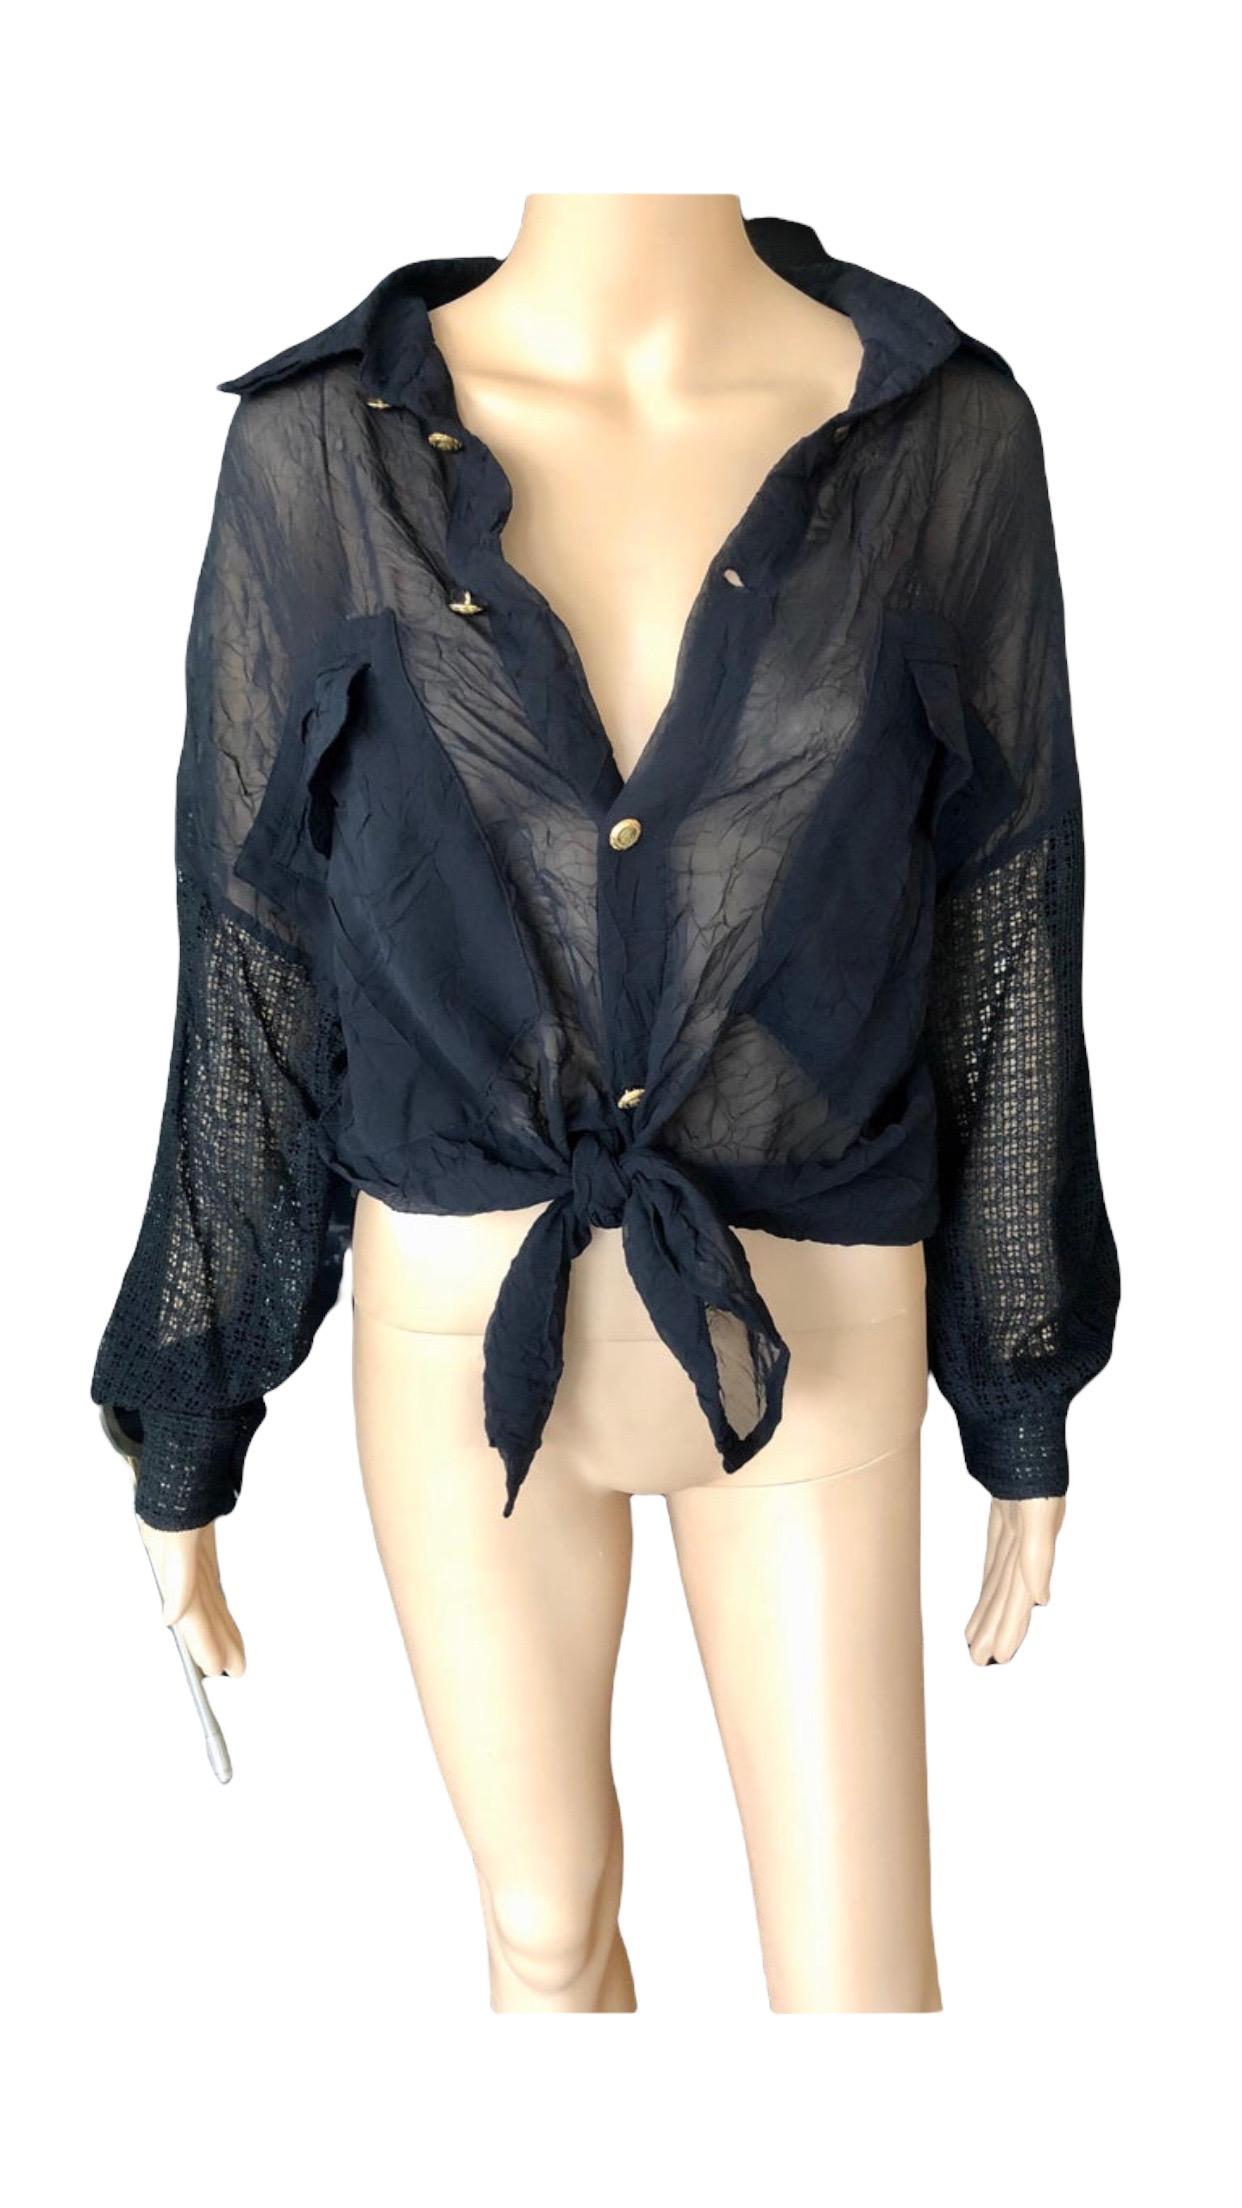 Gianni Versace c. 1990 Vintage Sheer Silk Mesh Black Shirt Blouse Top For Sale 5